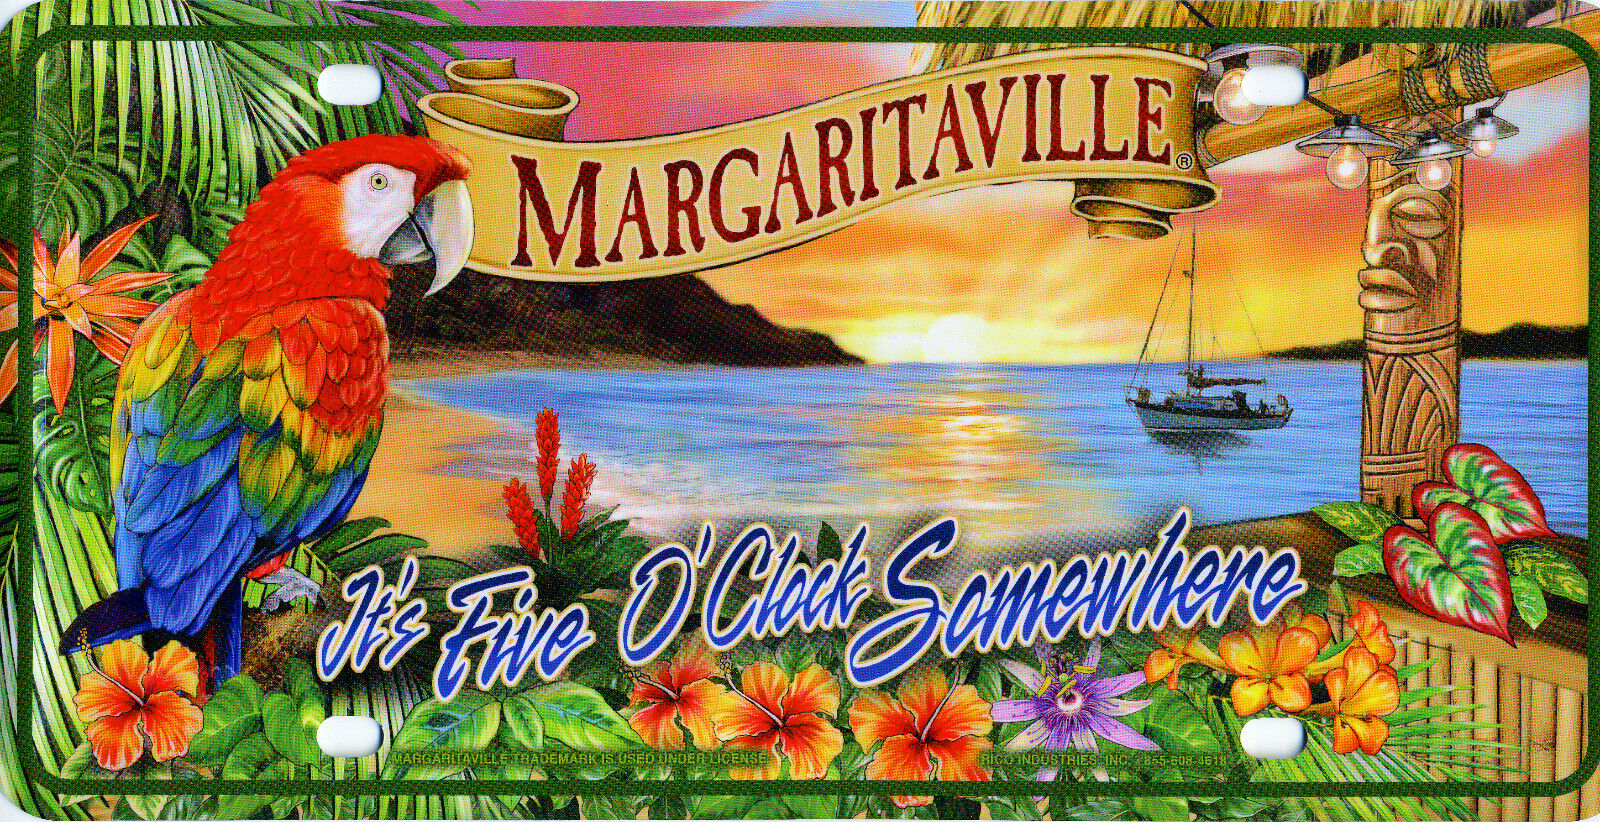 Jimmy Buffett Margaritaville It's 5 O'Clock Somewhere License Plate Sign NEW